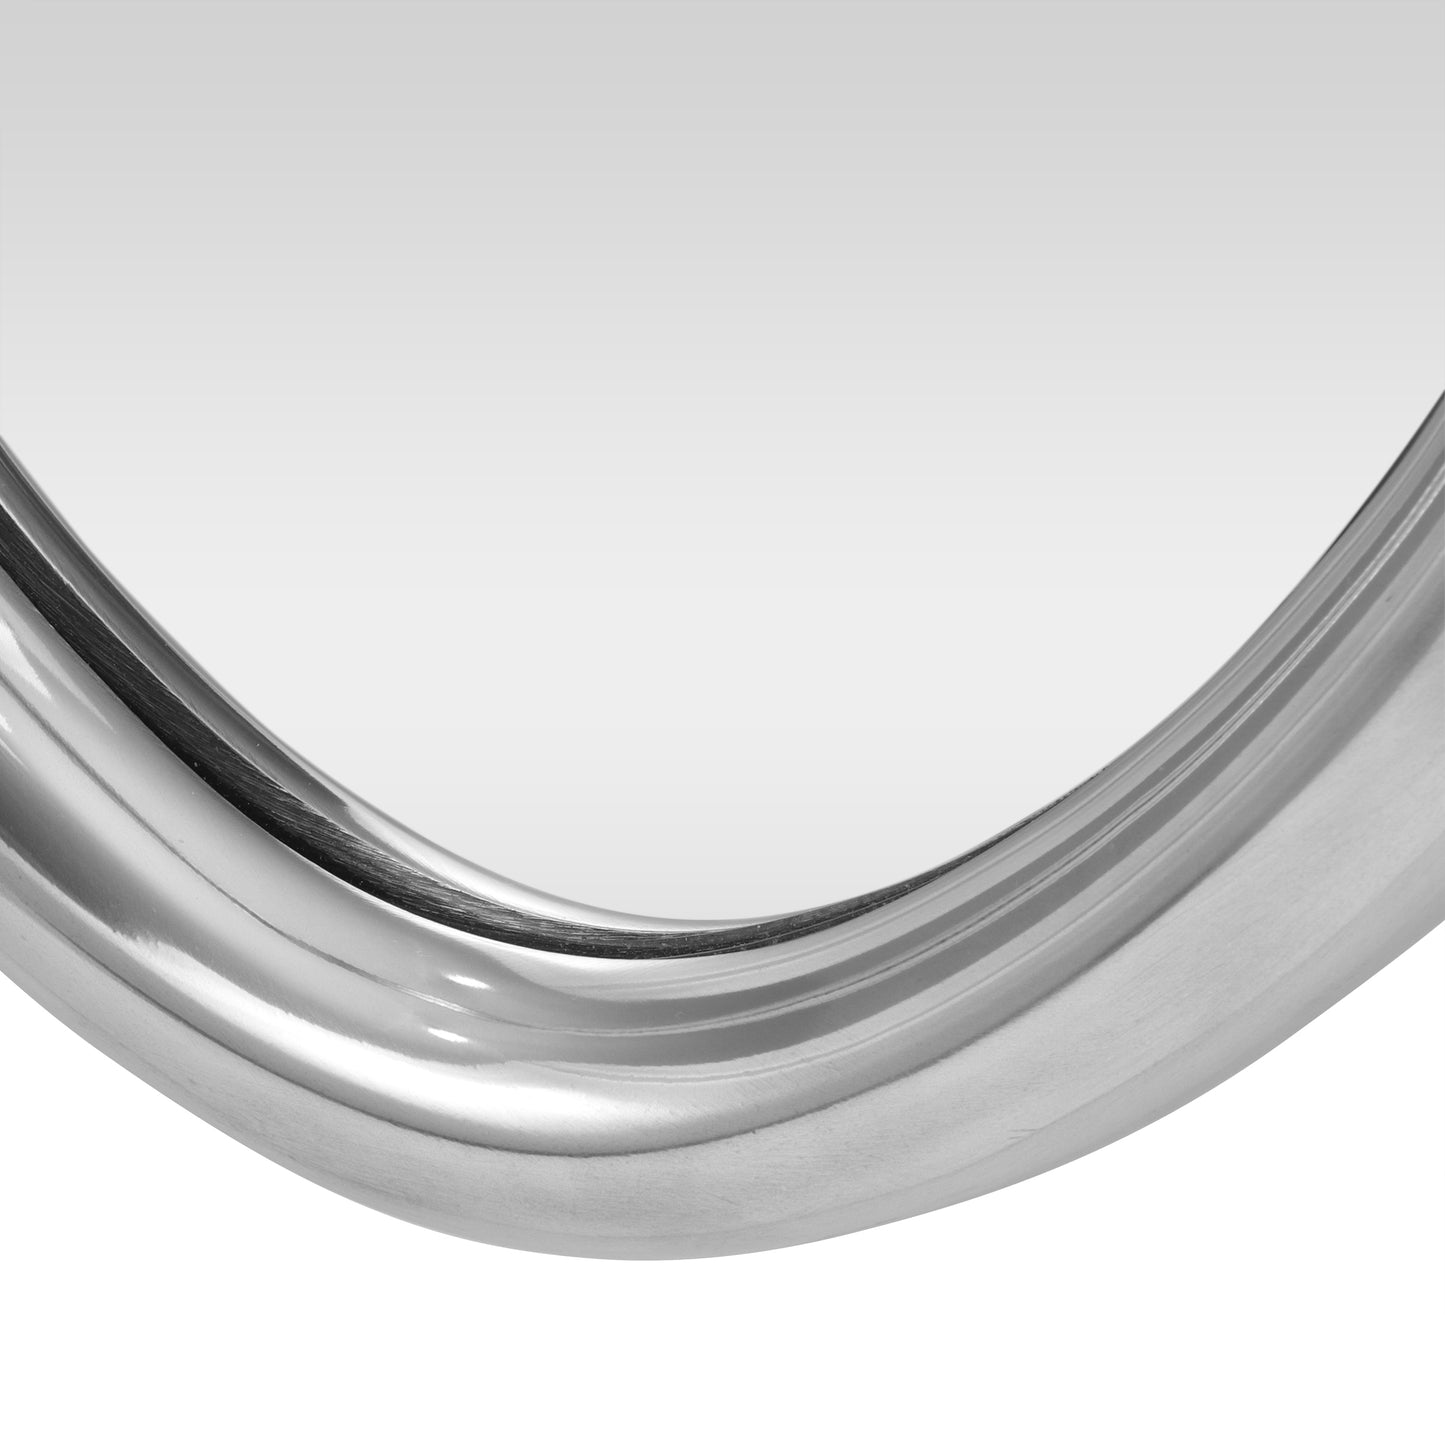 Loris Modern Handcrafted Oval Aluminum Wall Mirror, Silver